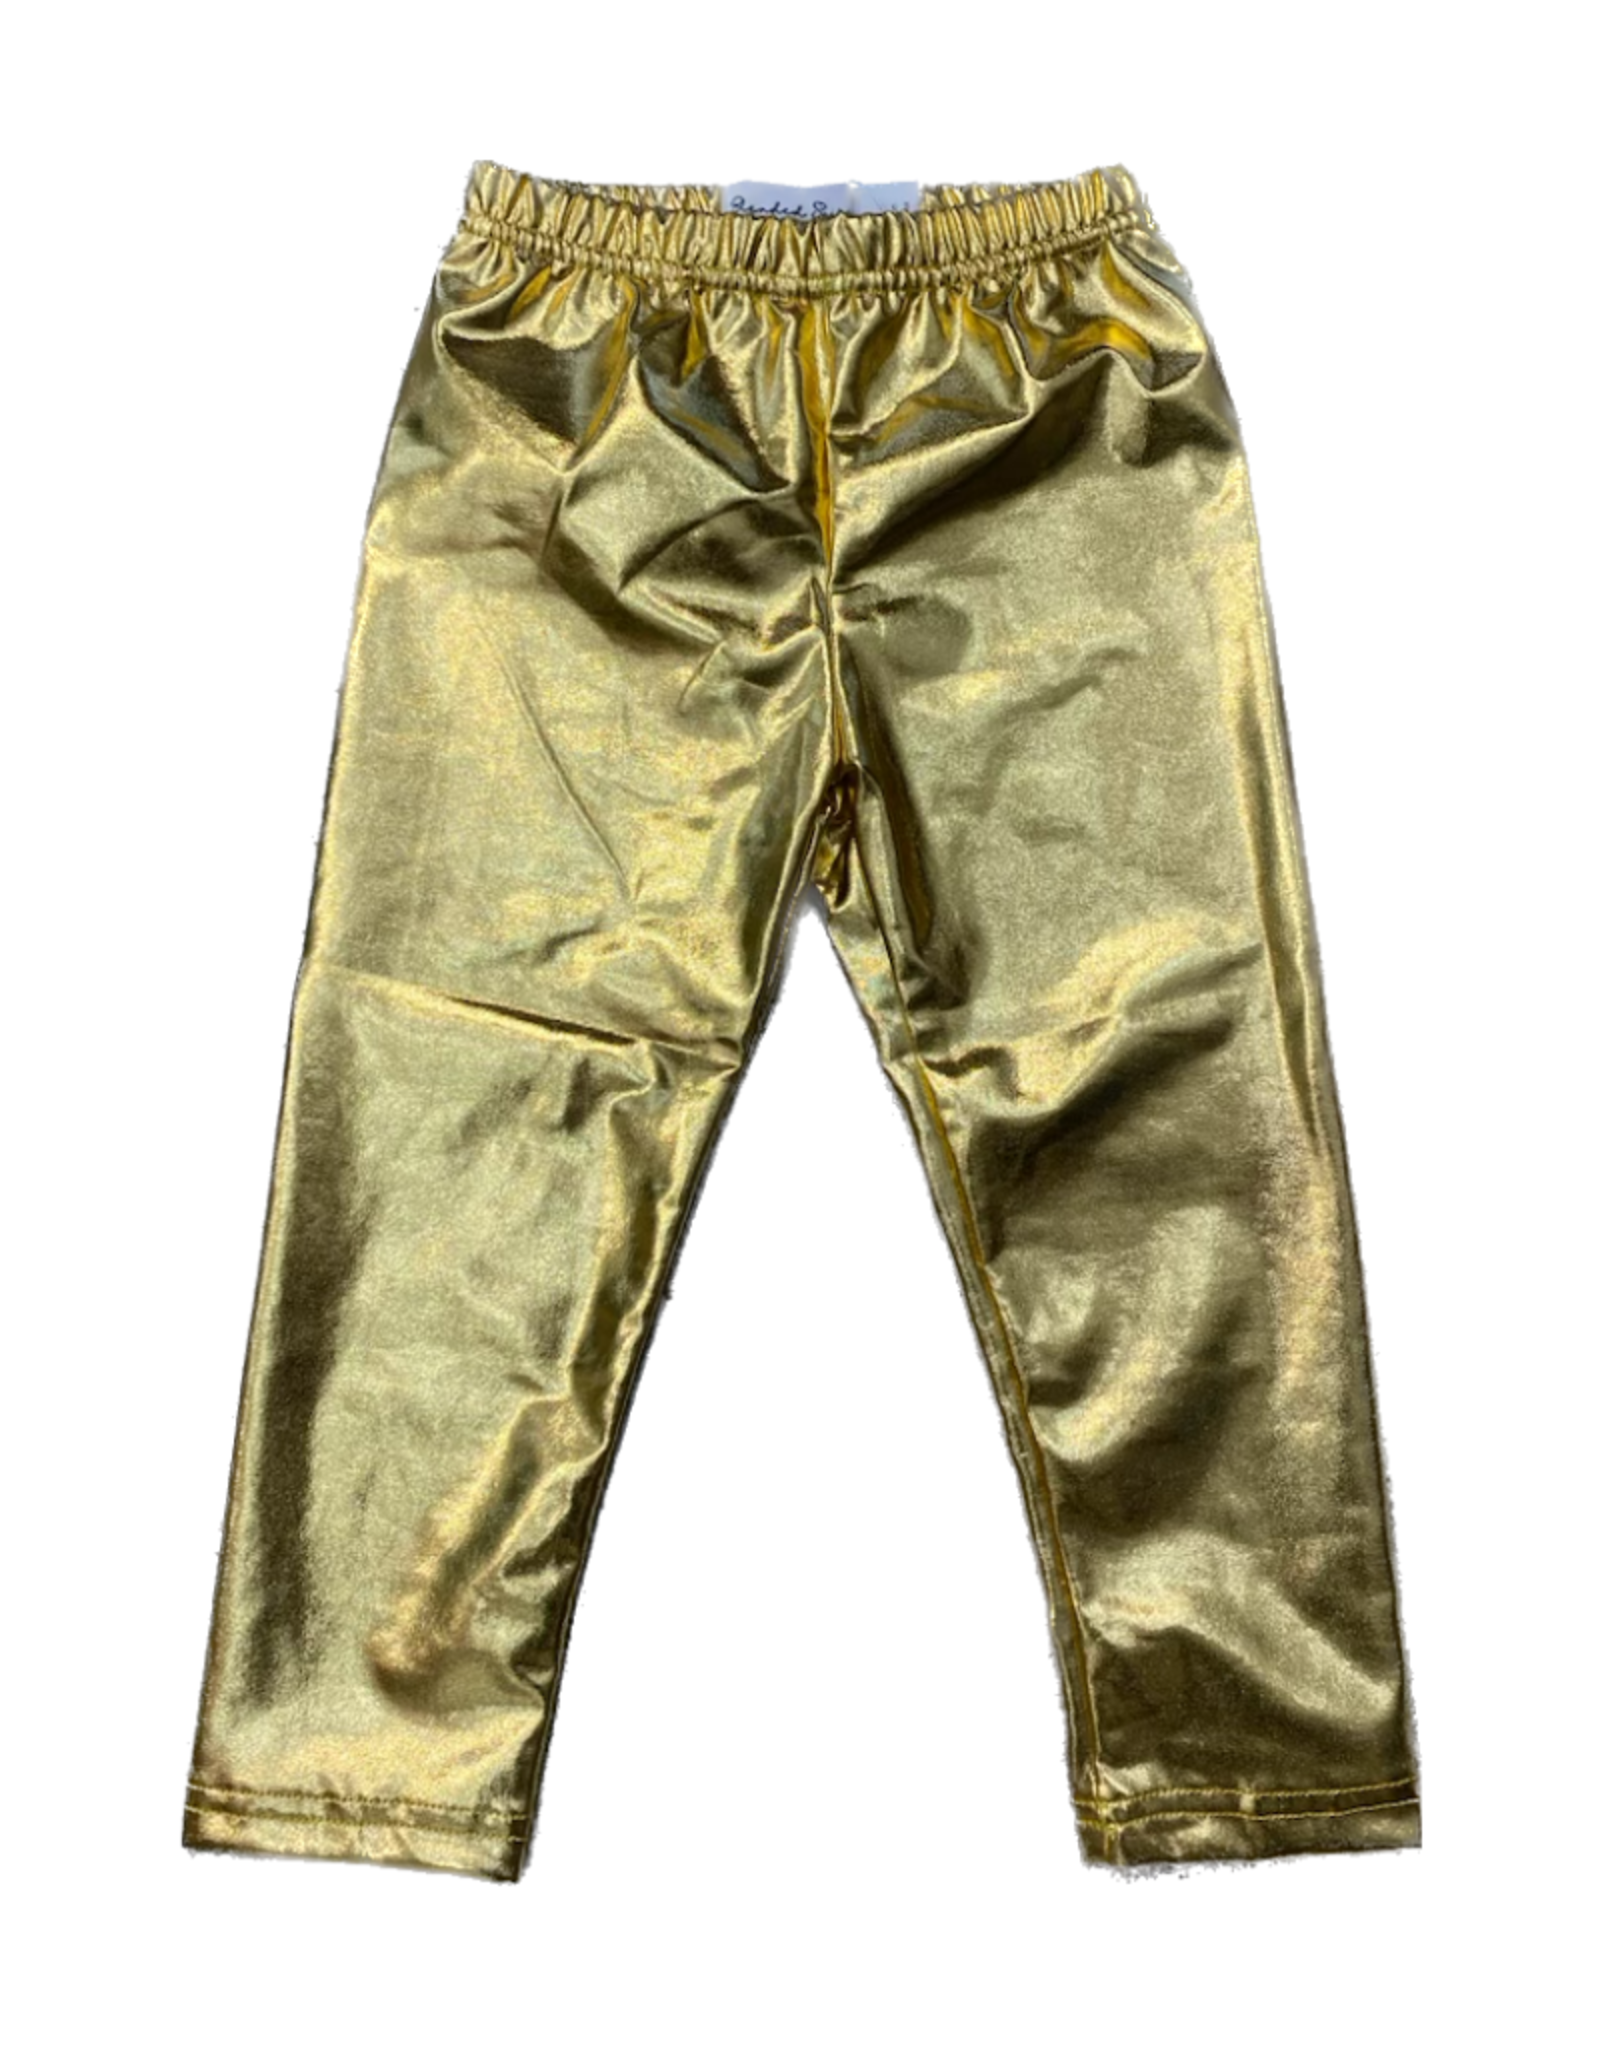 https://cdn.shoplightspeed.com/shops/629241/files/51310424/1600x2048x1/gold-metallic-leggings.jpg